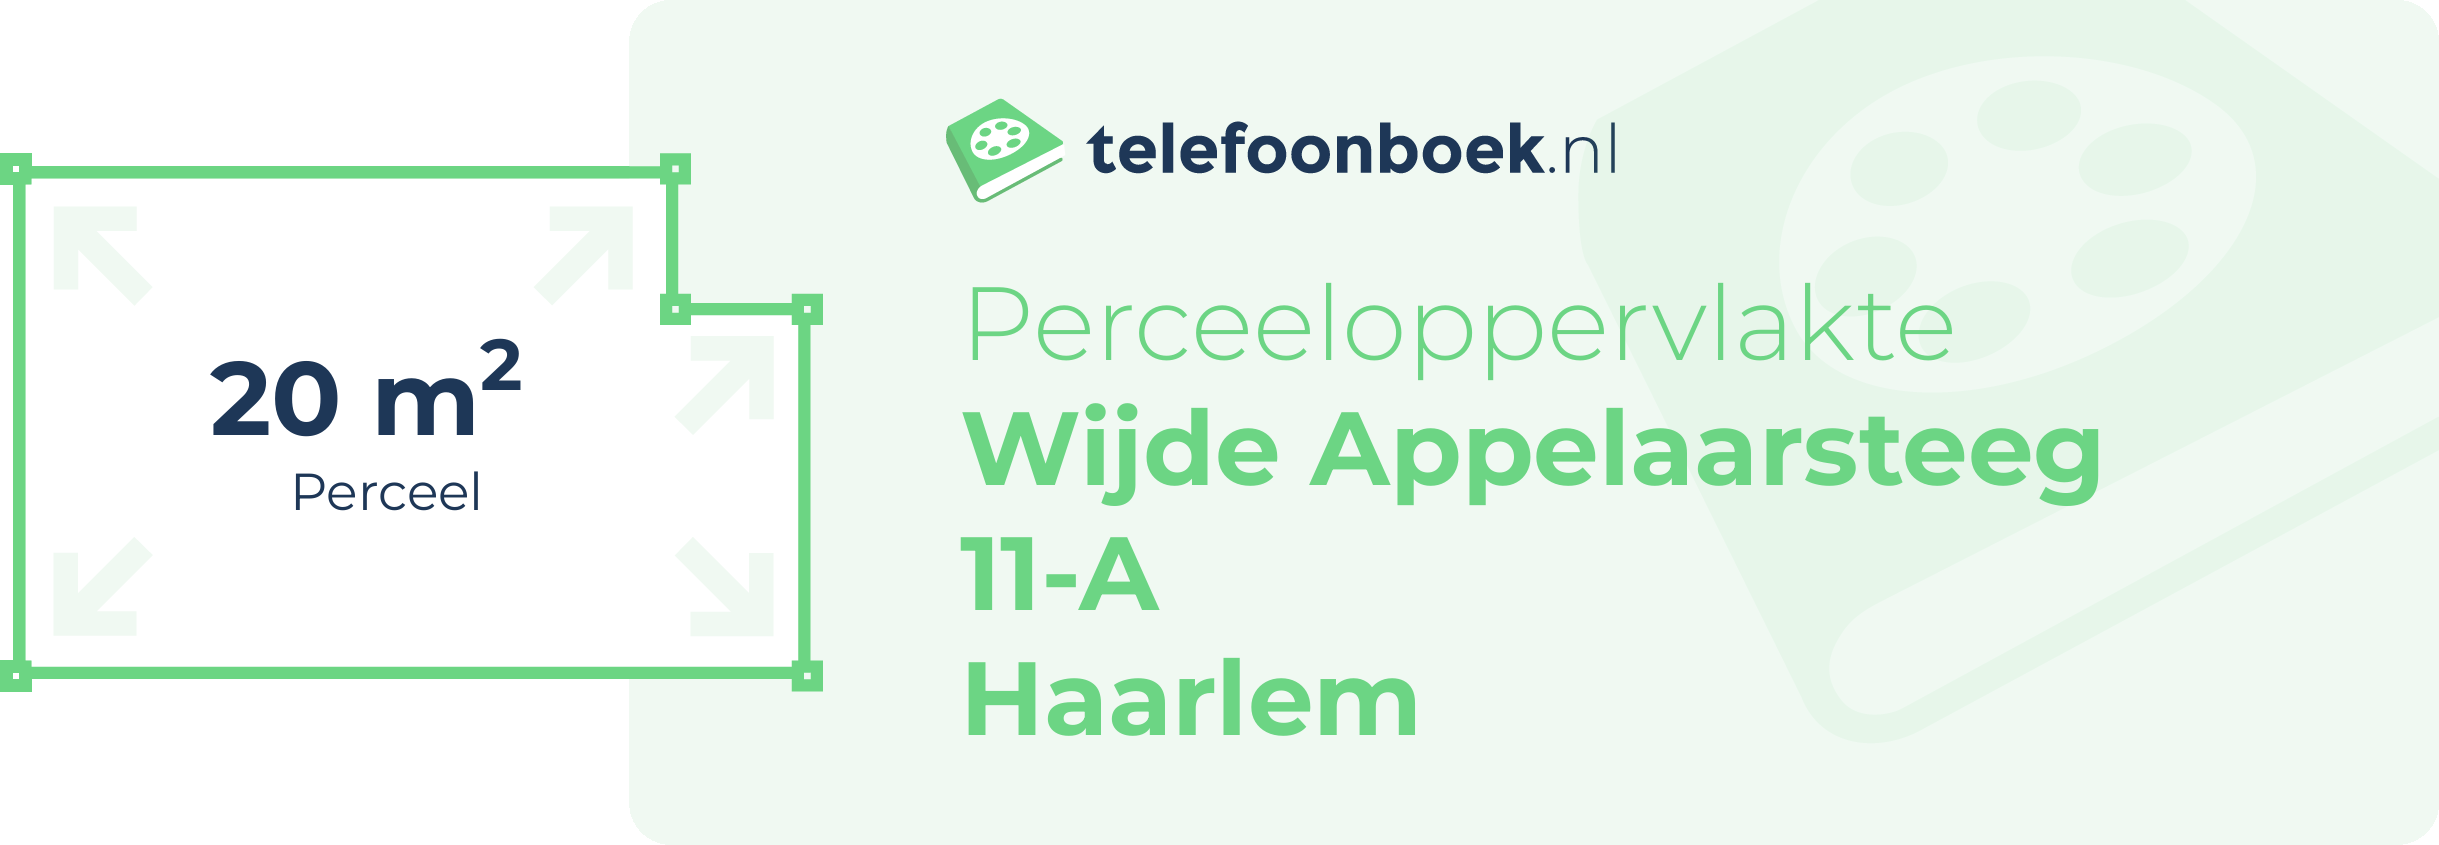 Perceeloppervlakte Wijde Appelaarsteeg 11-A Haarlem